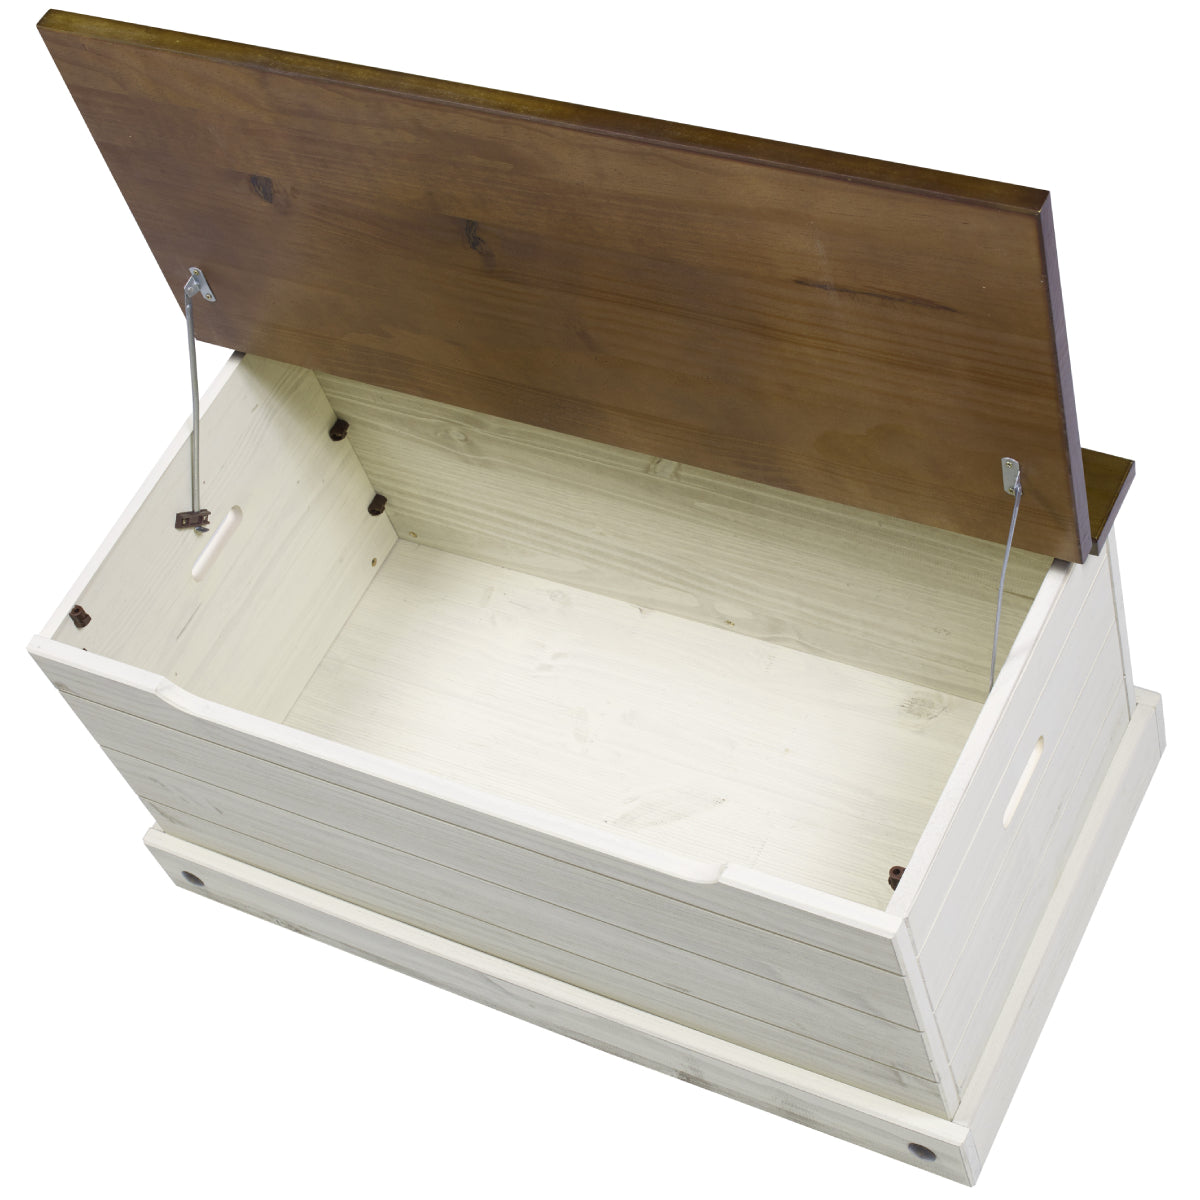 Wood Storage Trunk Ottoman White Distressed | Furniture Dash